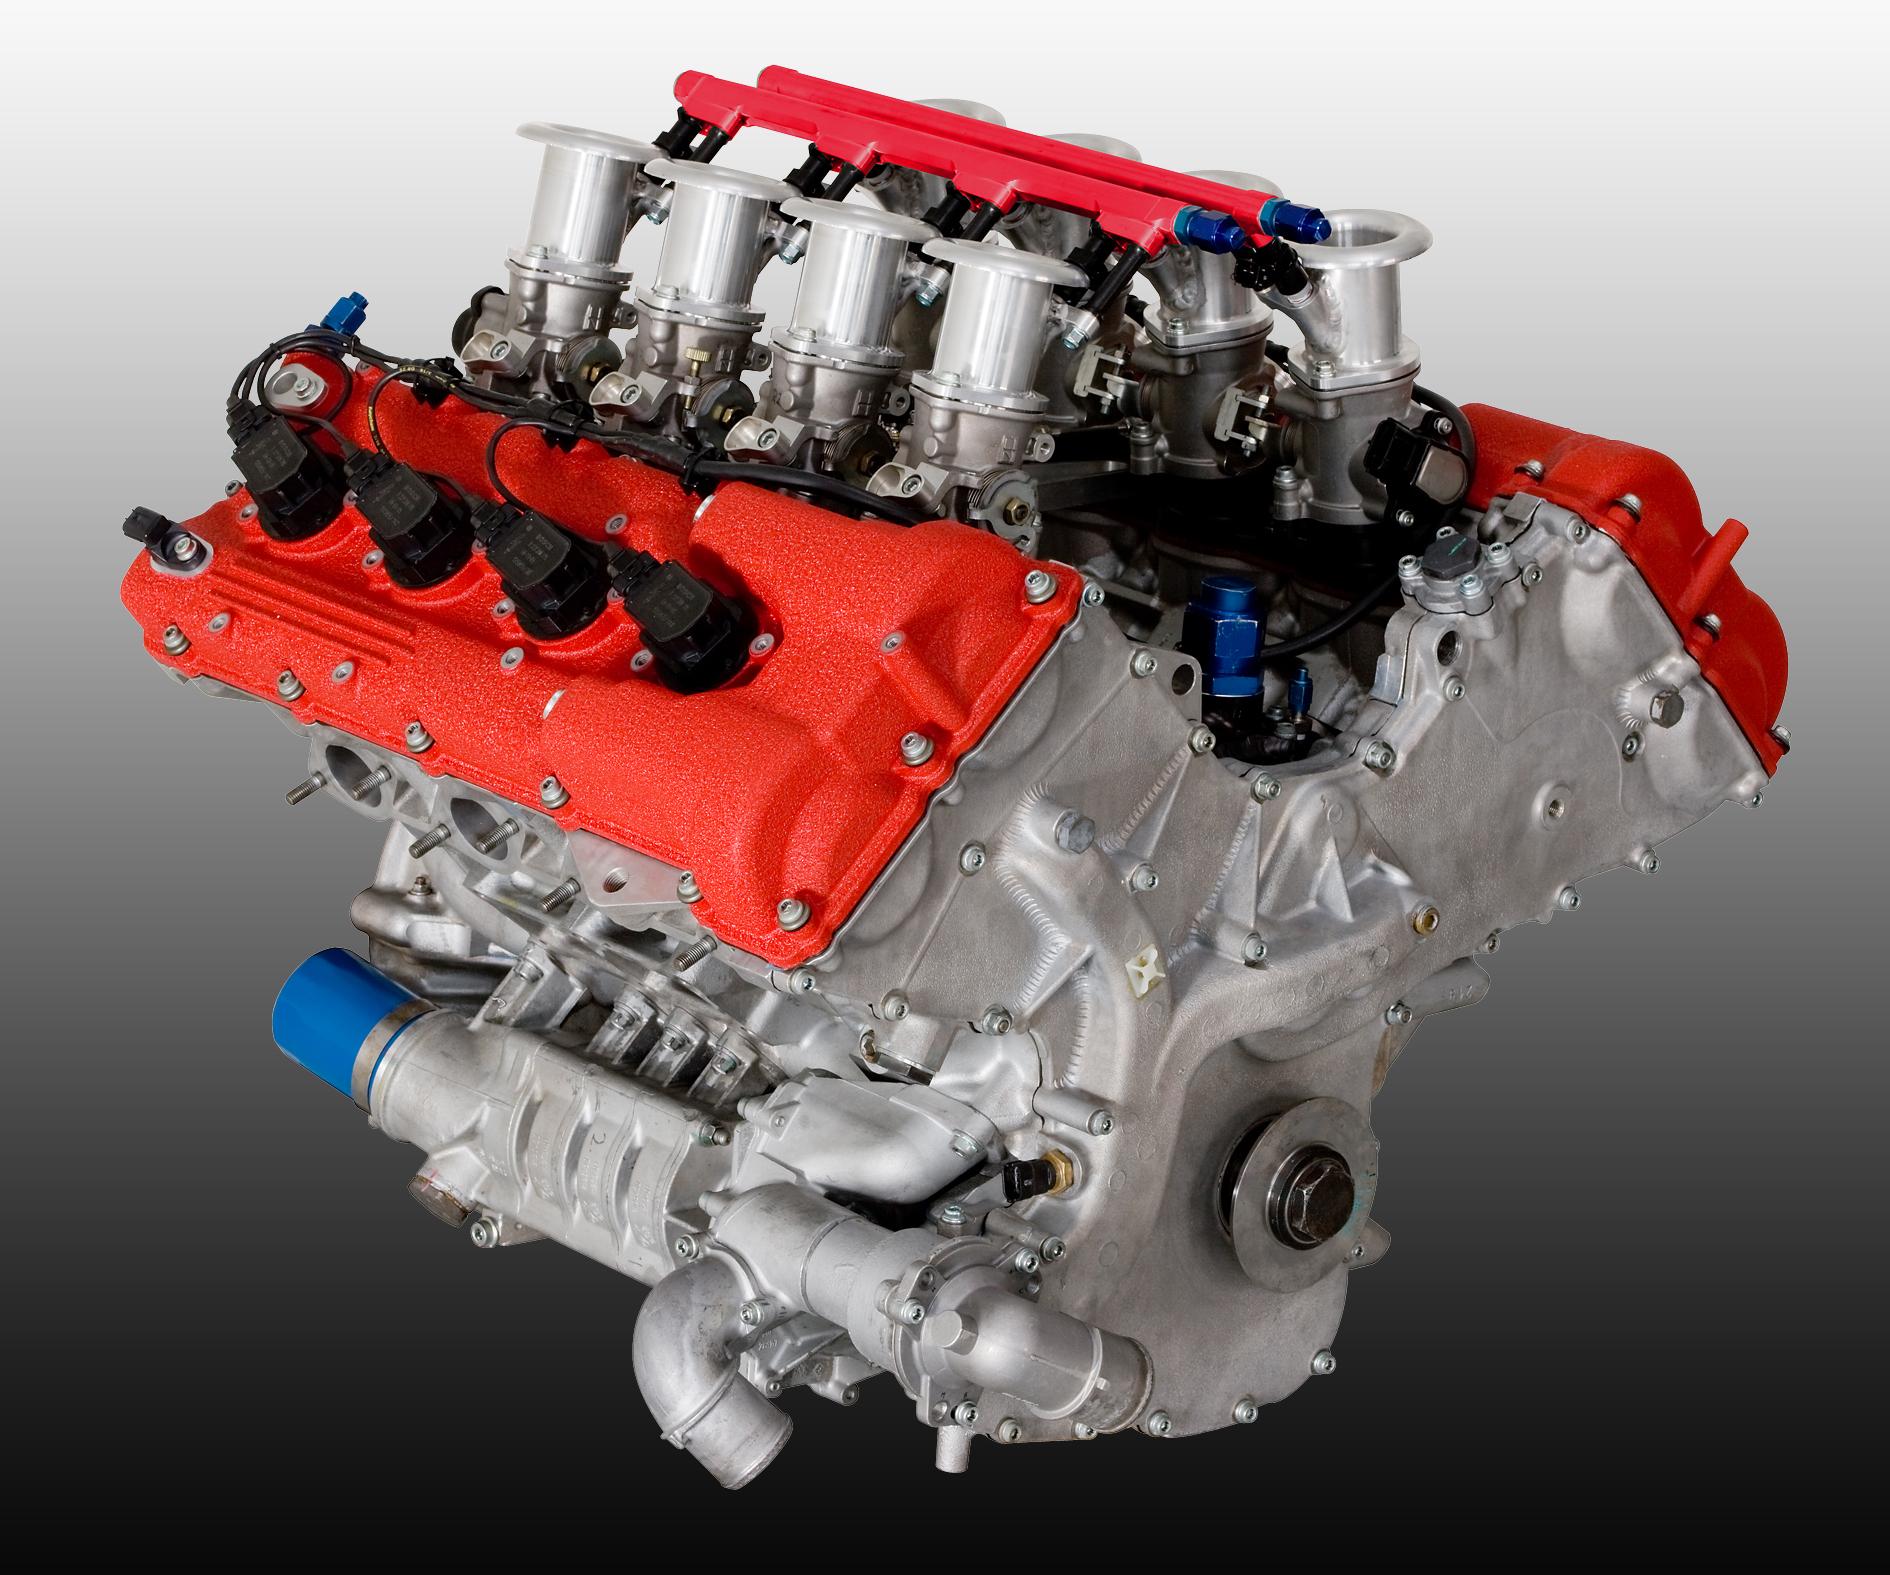 Ferrari_F430_GT300_engine_image212_04_120x100_400 2, image source: www.tdi-...